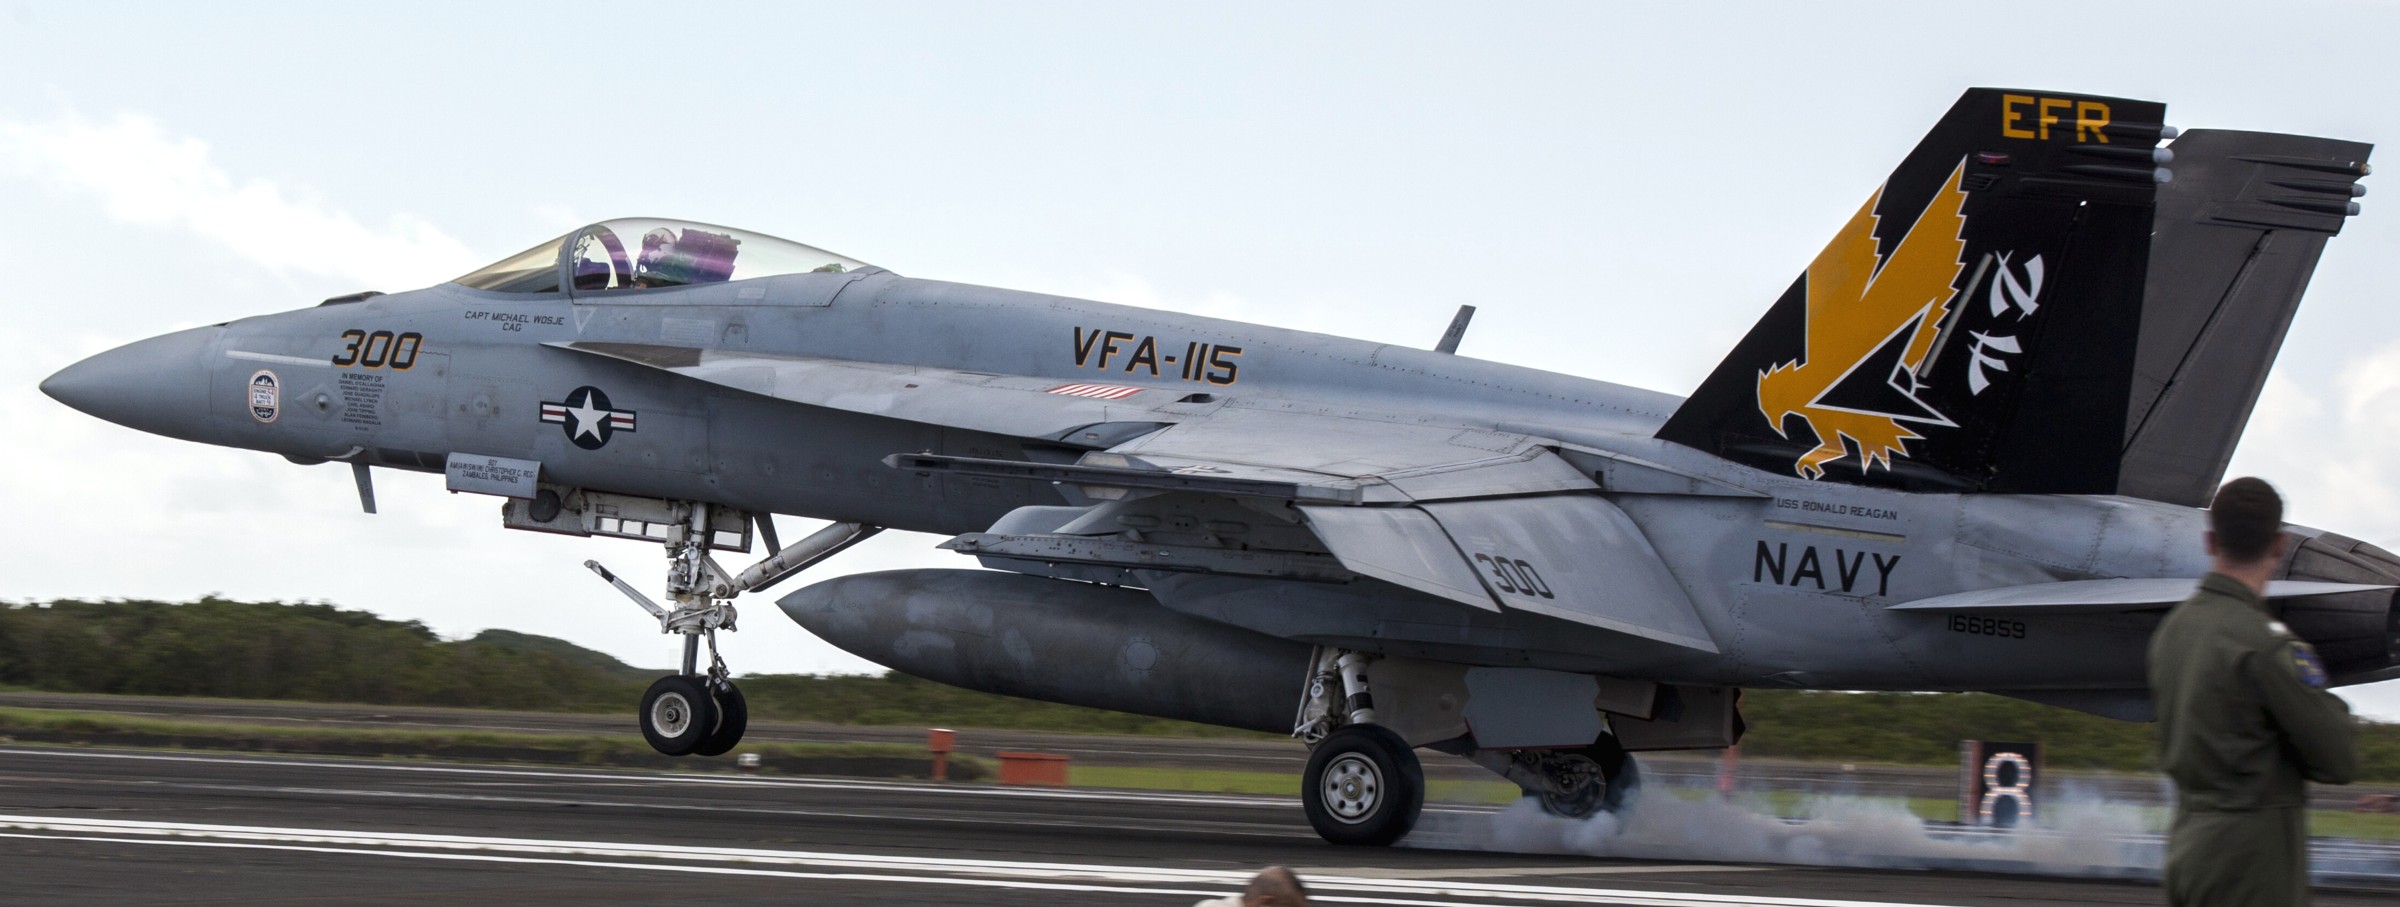 vfa-115 eagles strike fighter squadron f/a-18e super hornet cvw-5 uss ronald reagan 2017 73